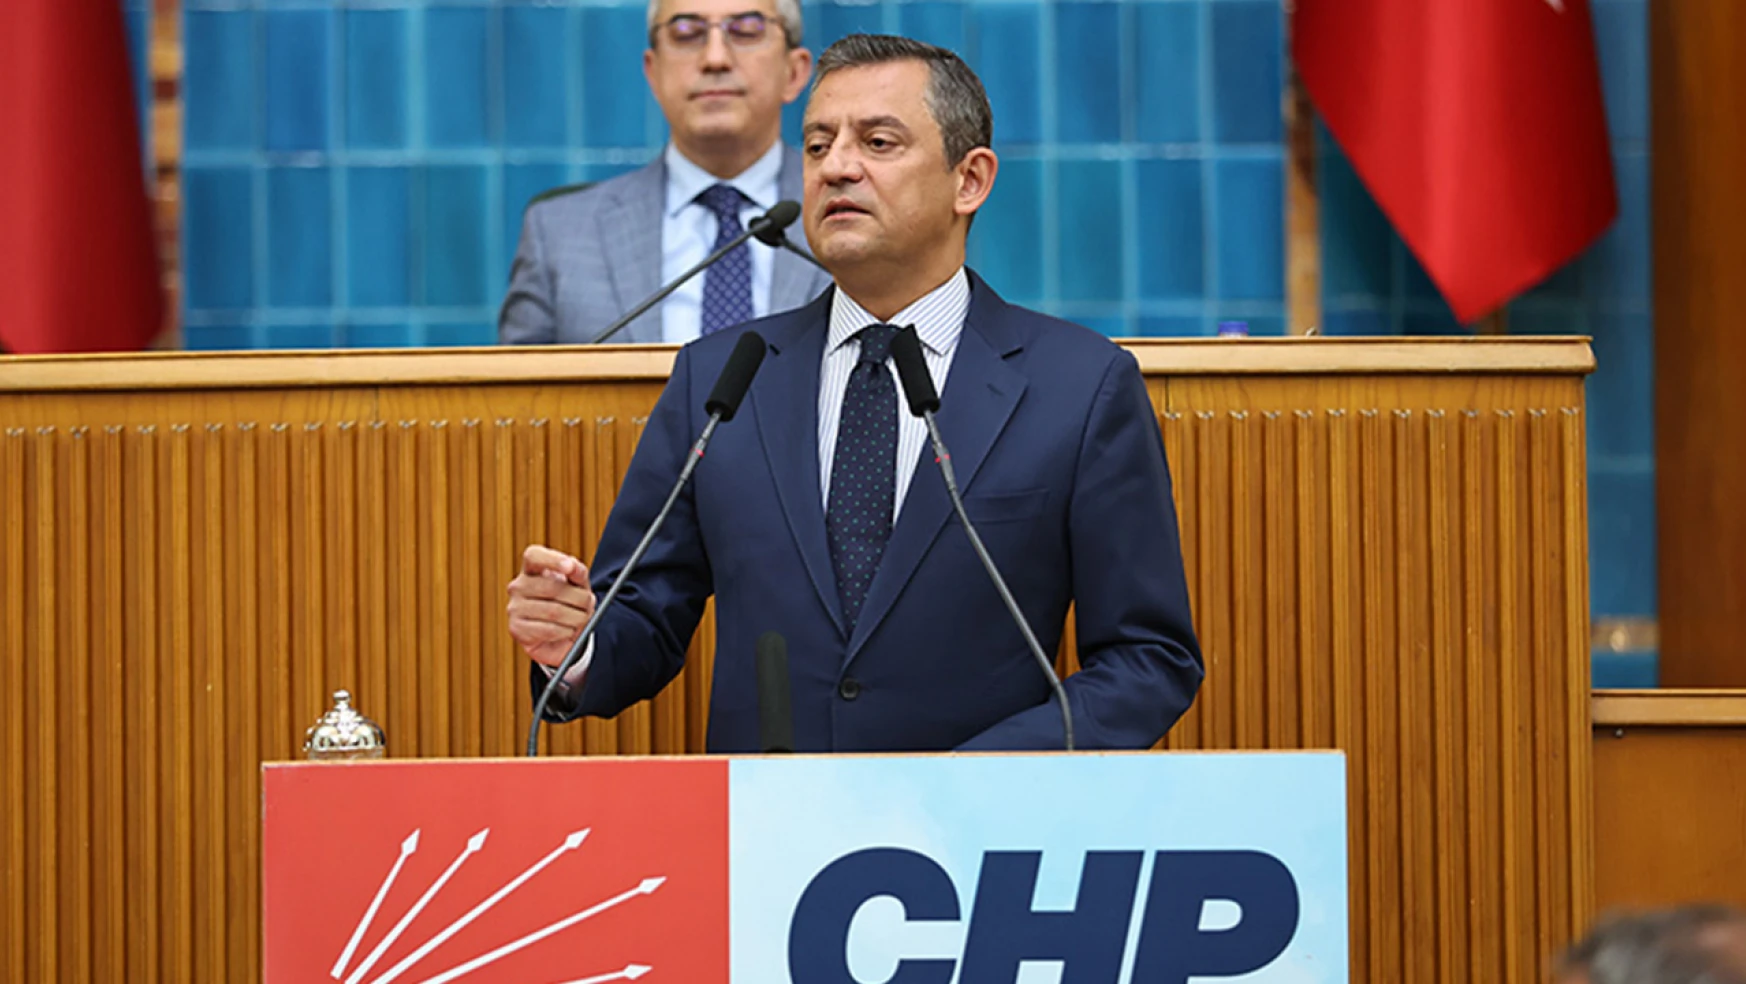 CHP lideri Özel'den, Taksim'i 1 Mayıs'a açın çağrısı!